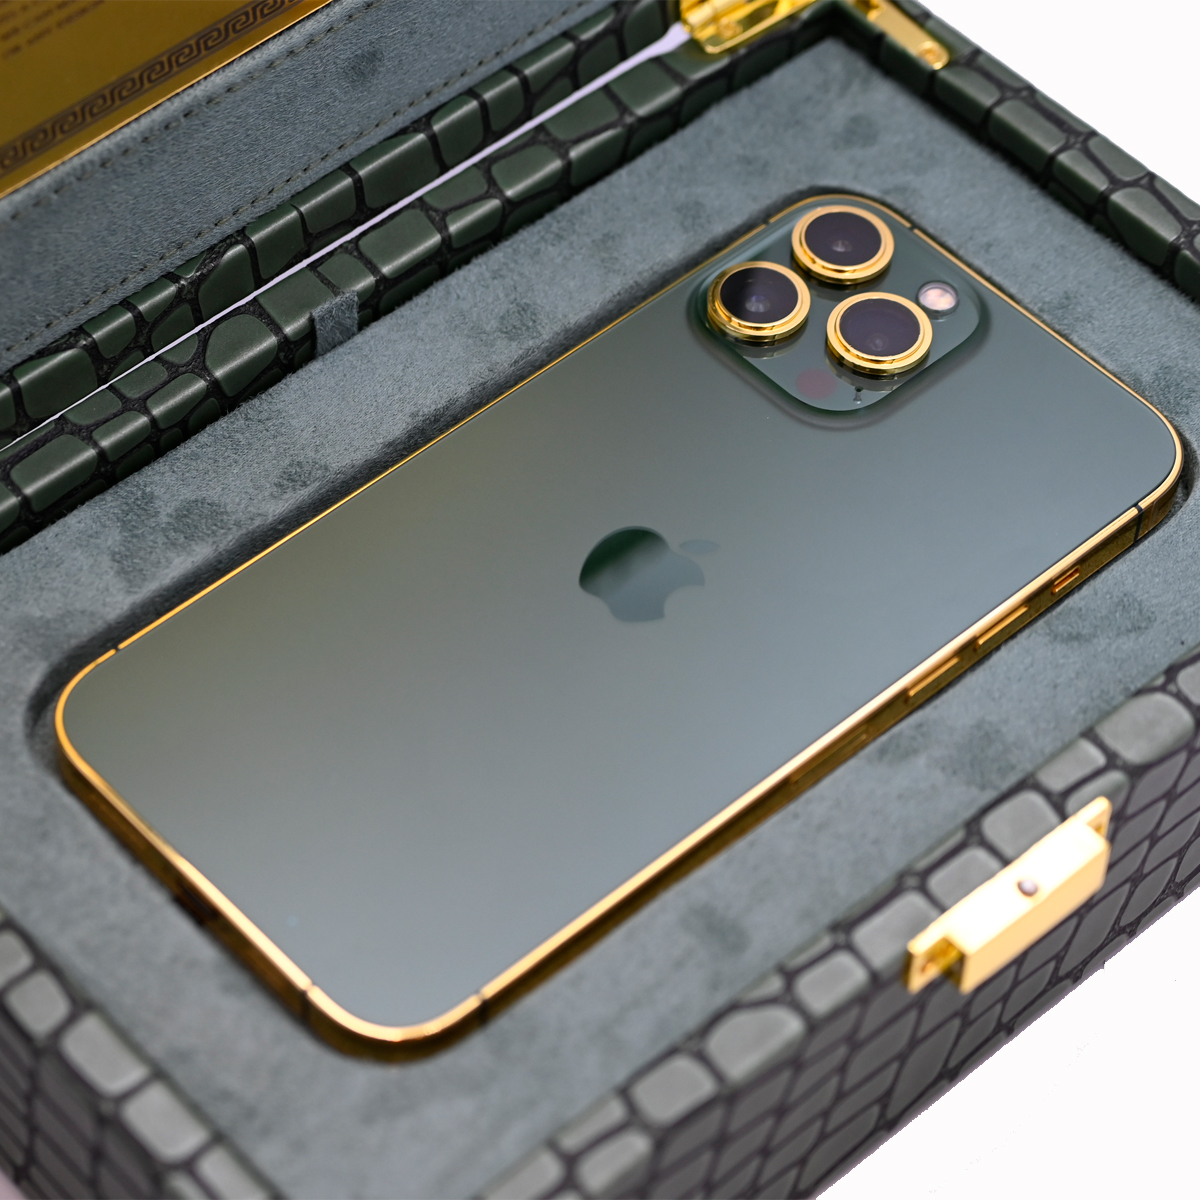 Caviar Luxury 24k Gold Frame Customized iPhone 13 Pro Max 1TB, Royal Green